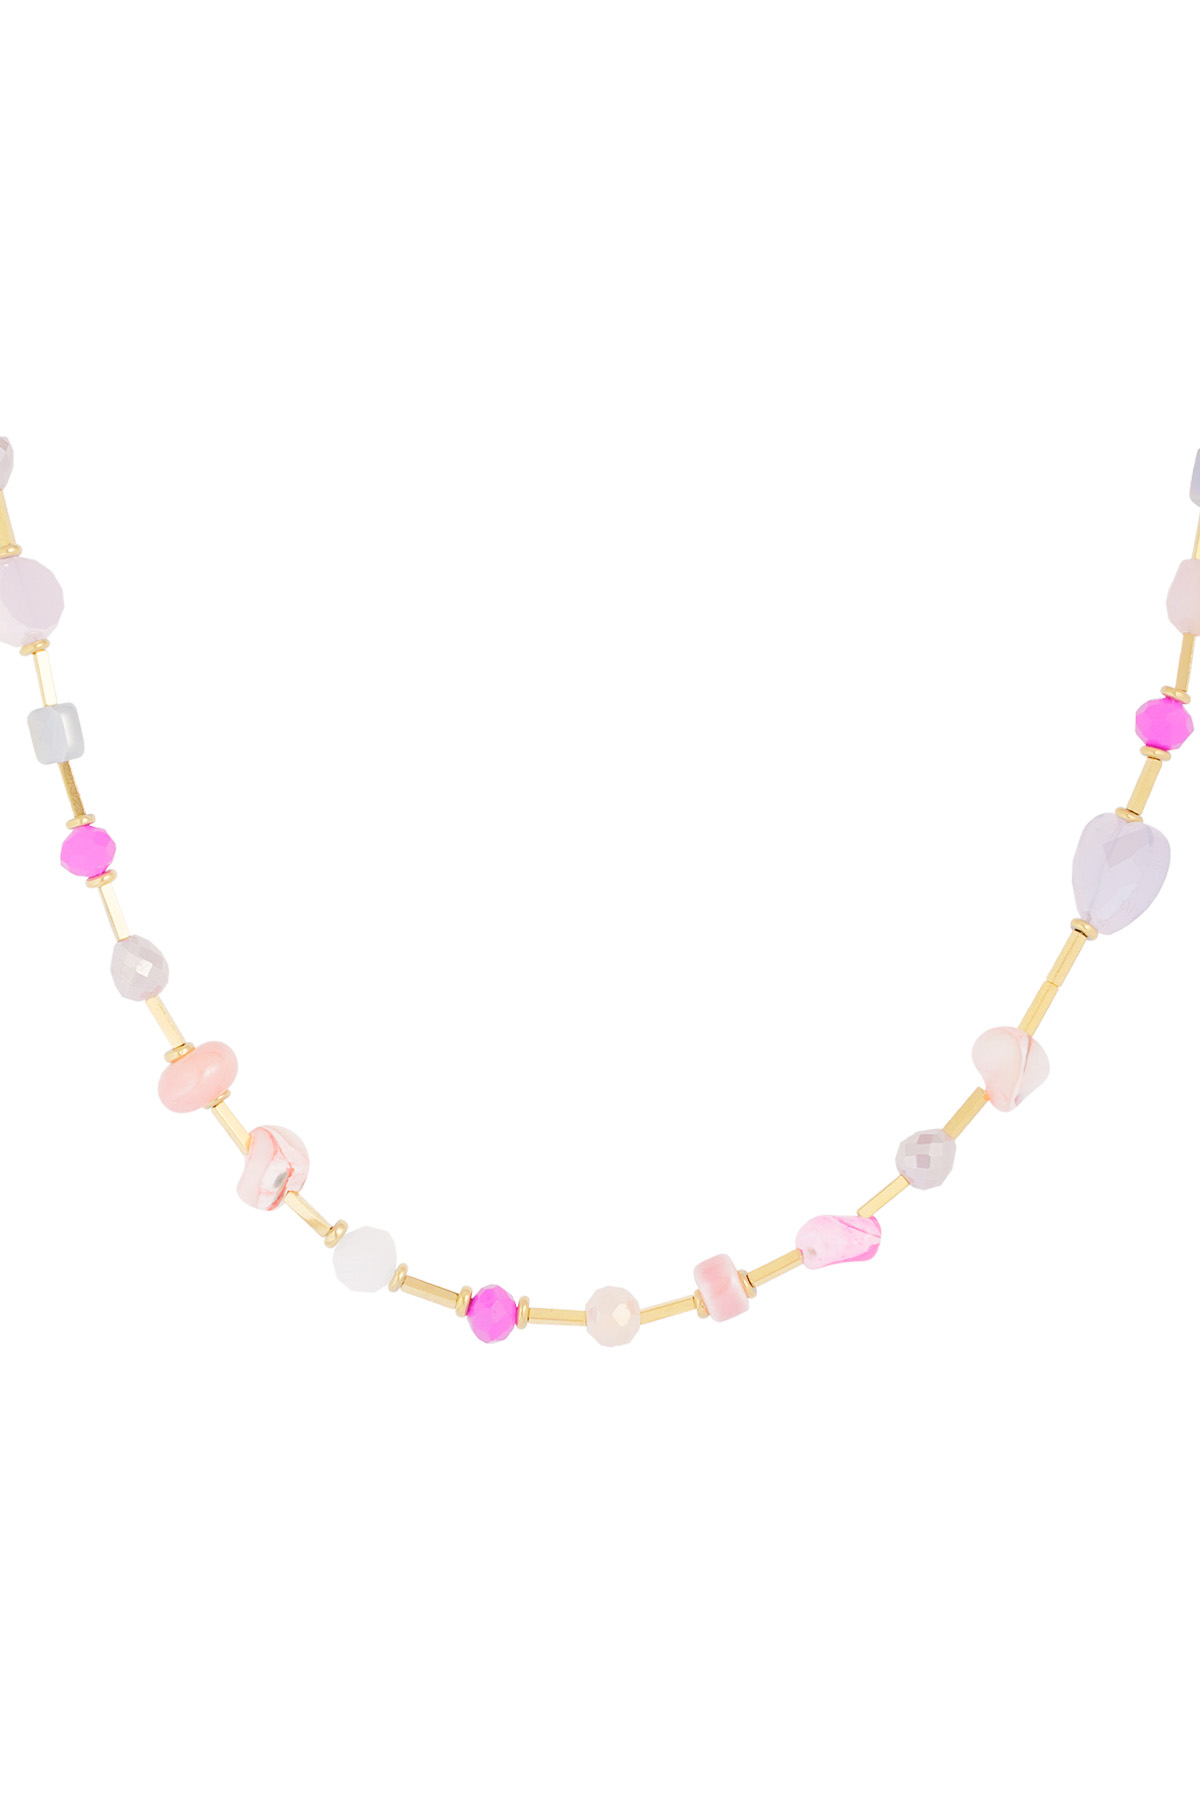 Necklace pastel wonderland - pink gold